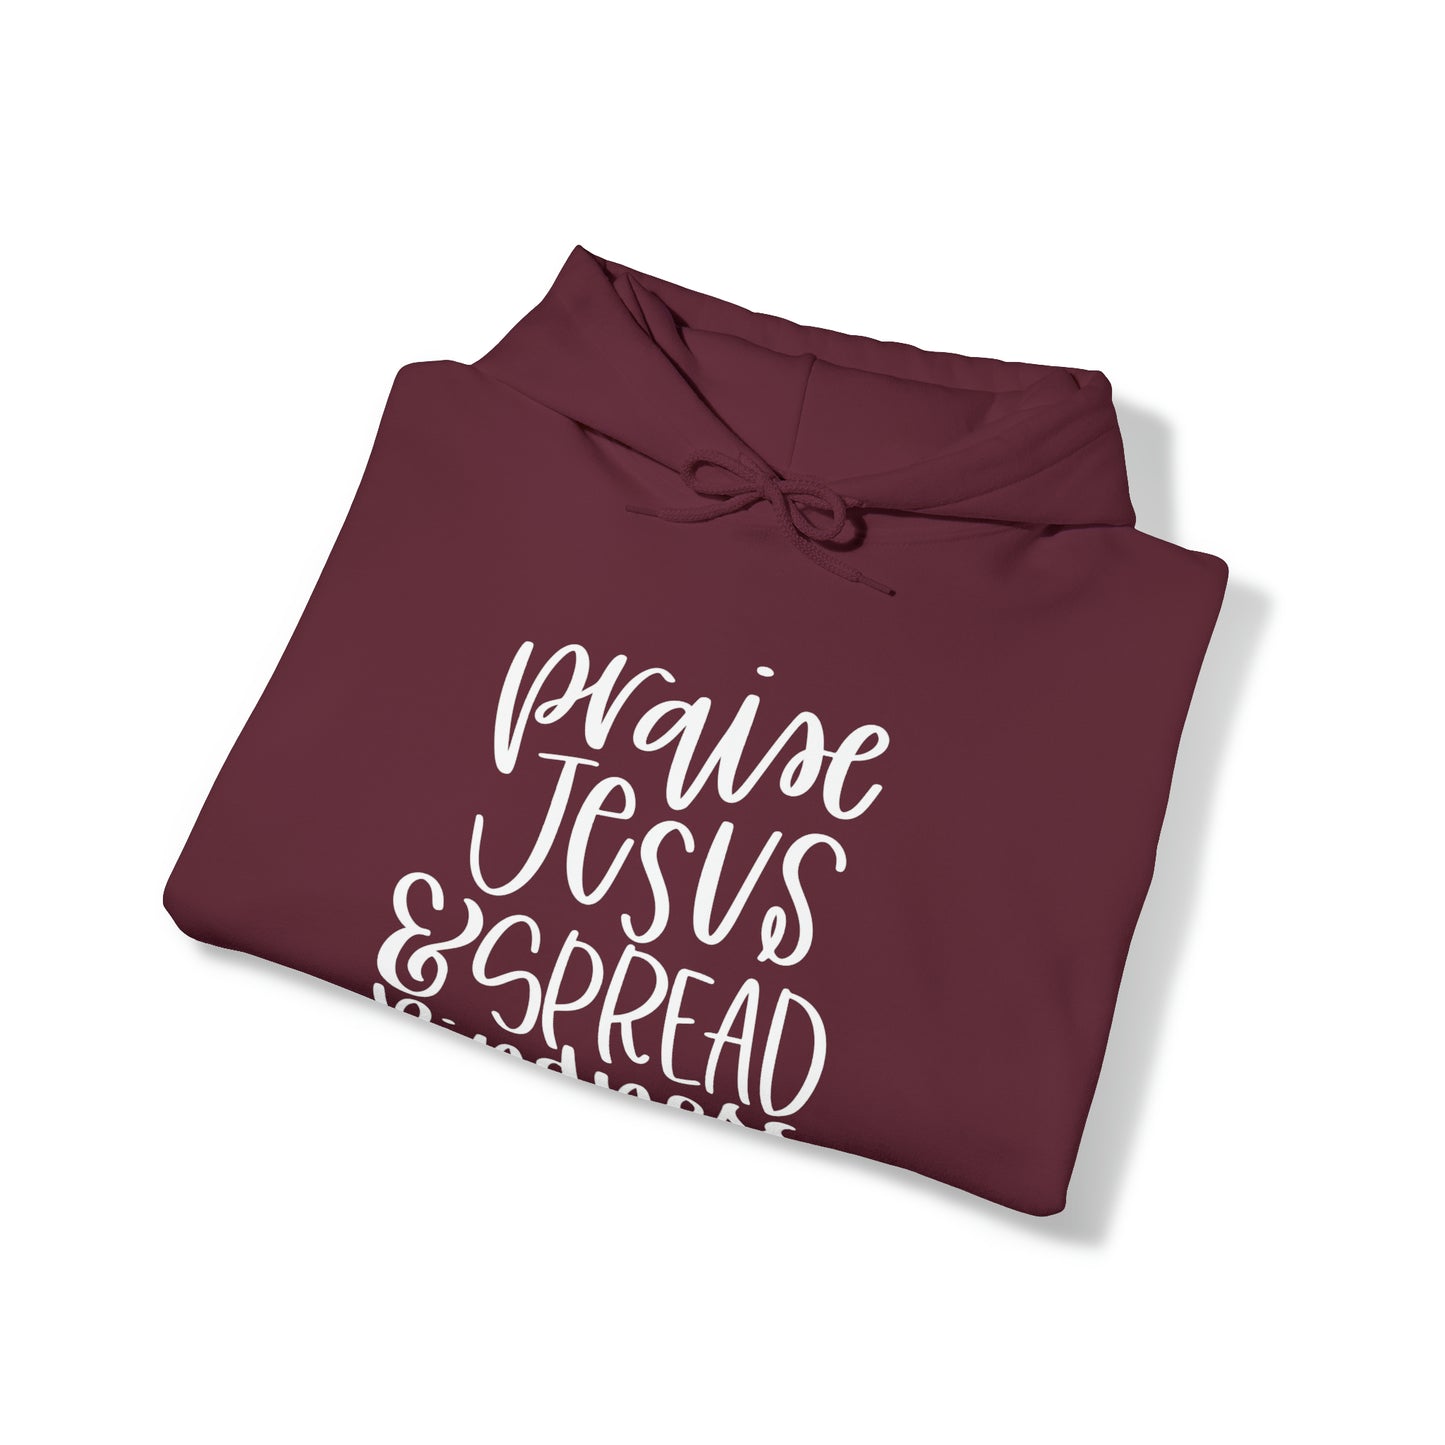 Love Jesus Spread Kindness Unisex Heavy Blend™ Hooded Sweatshirt